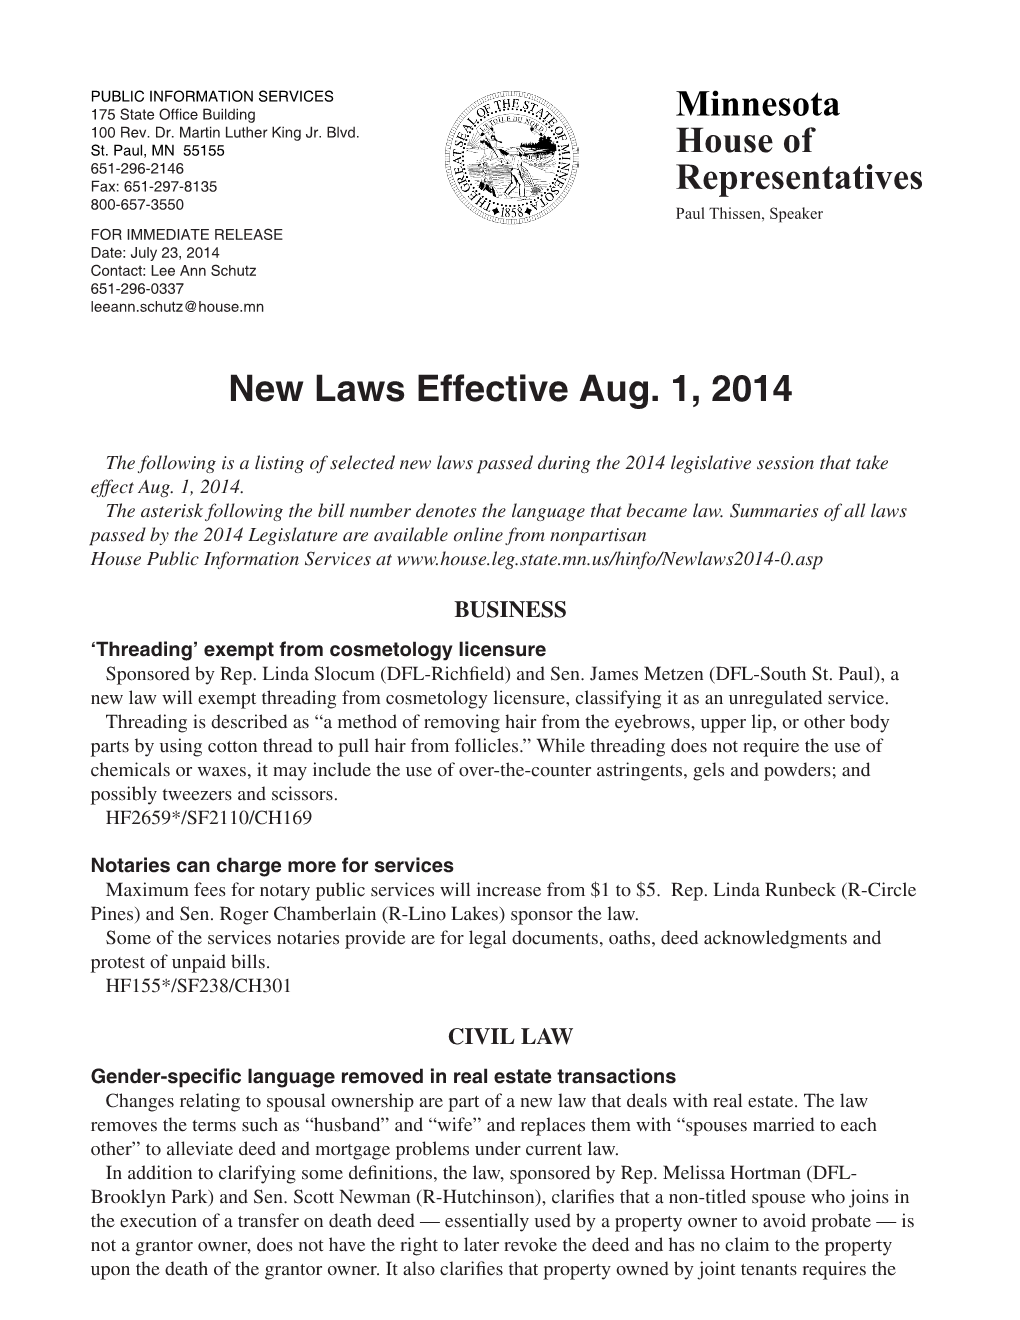 Minnesota House of Representatives New Laws Effective Aug. 1, 2014